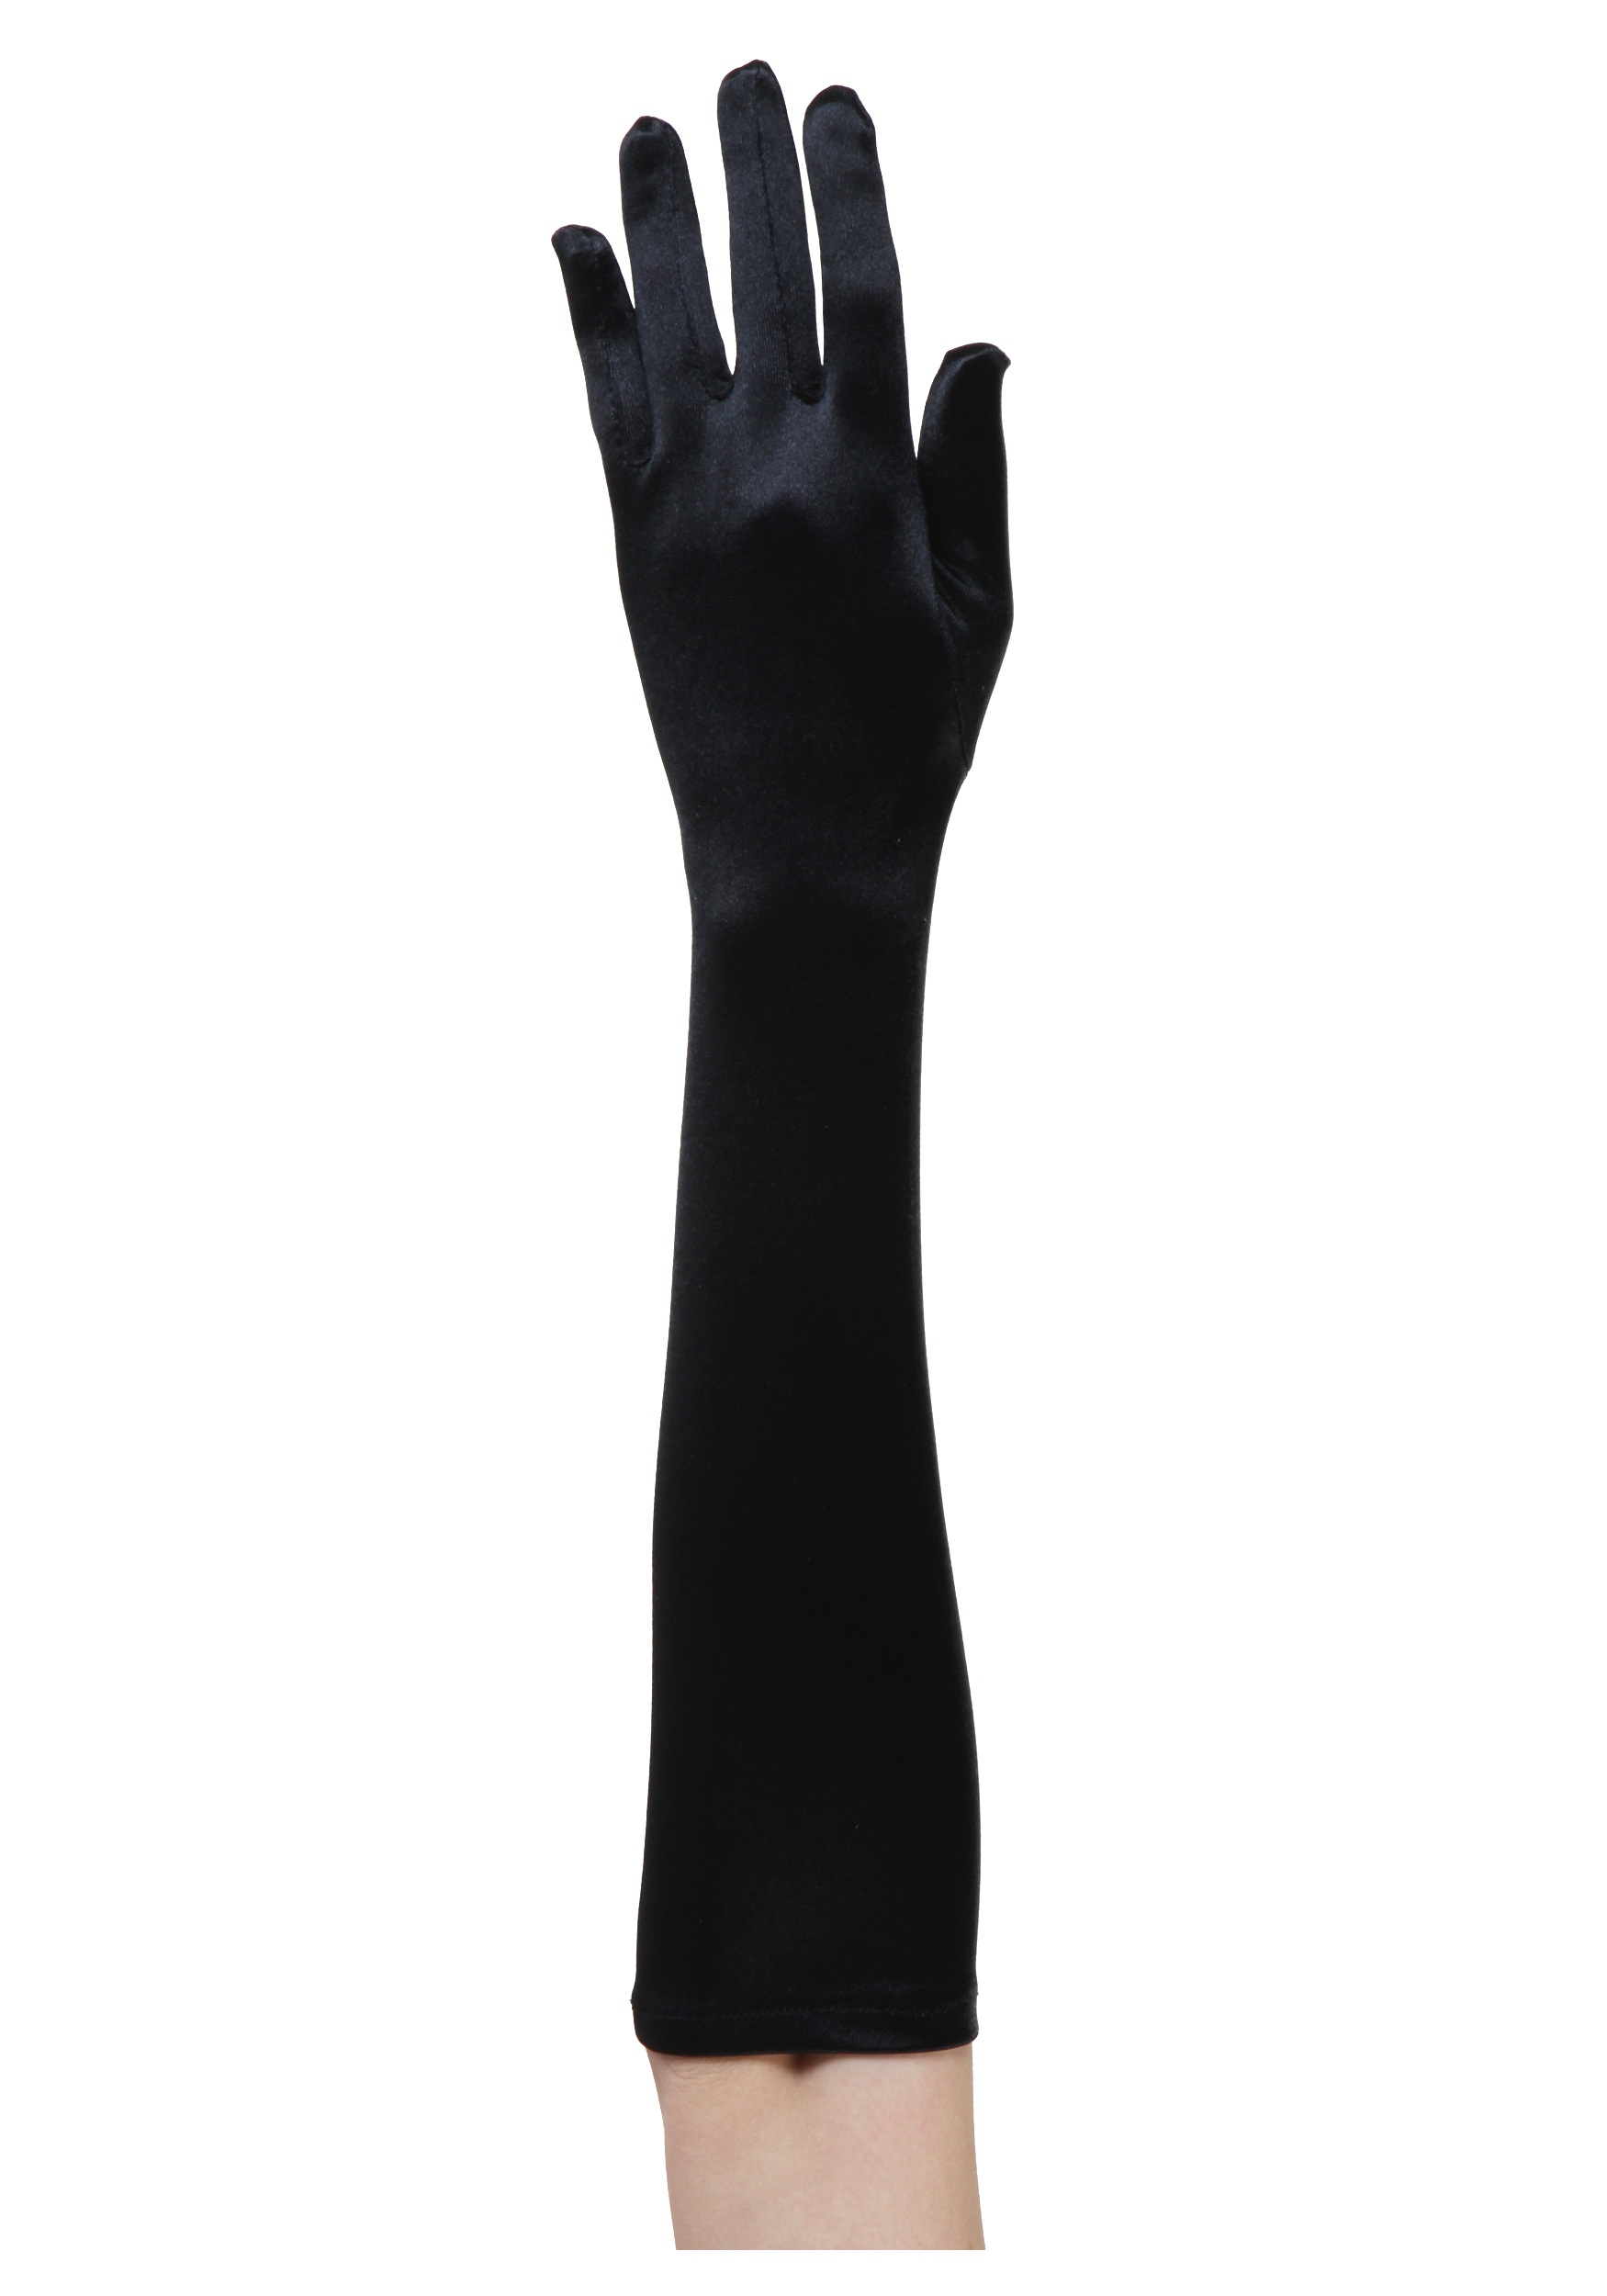 Plus Size Elbow Length Black Gloves